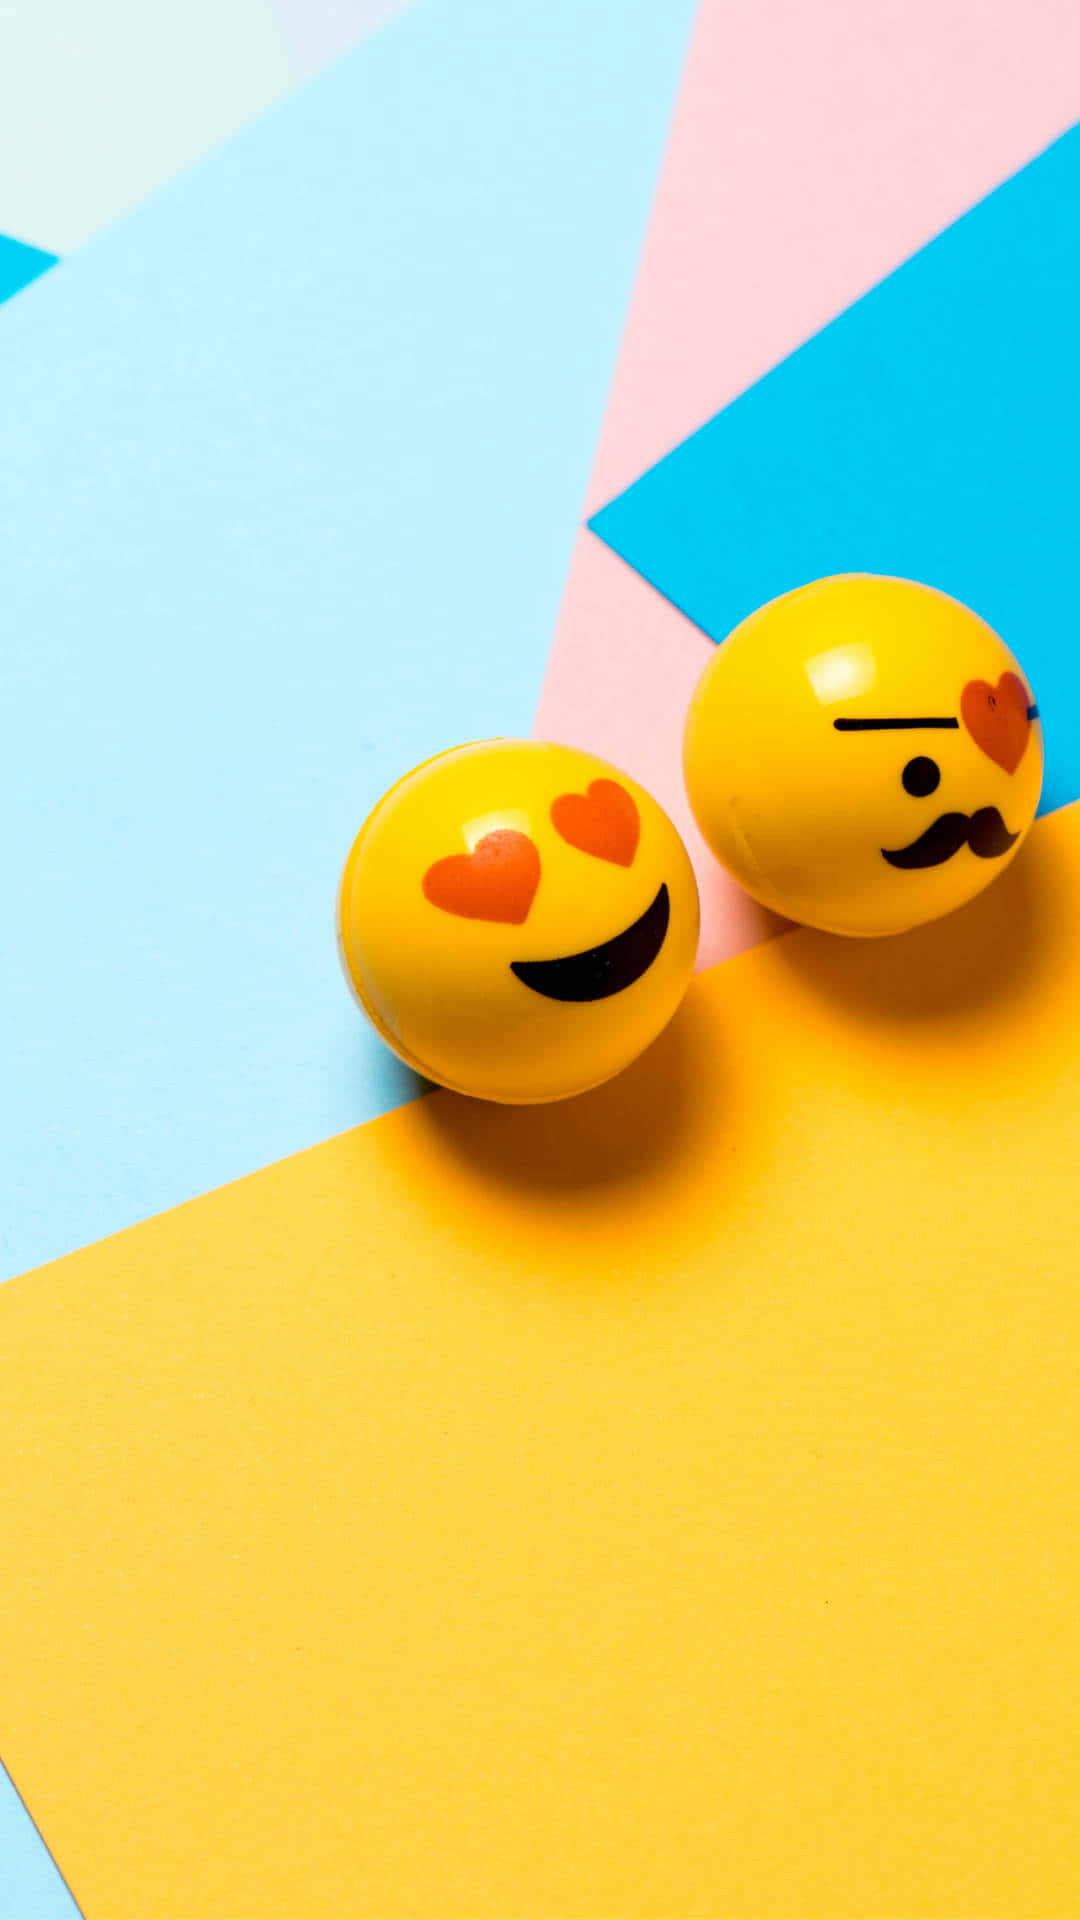 Download Cute Emoji Flat Lay Wallpaper | Wallpapers.com